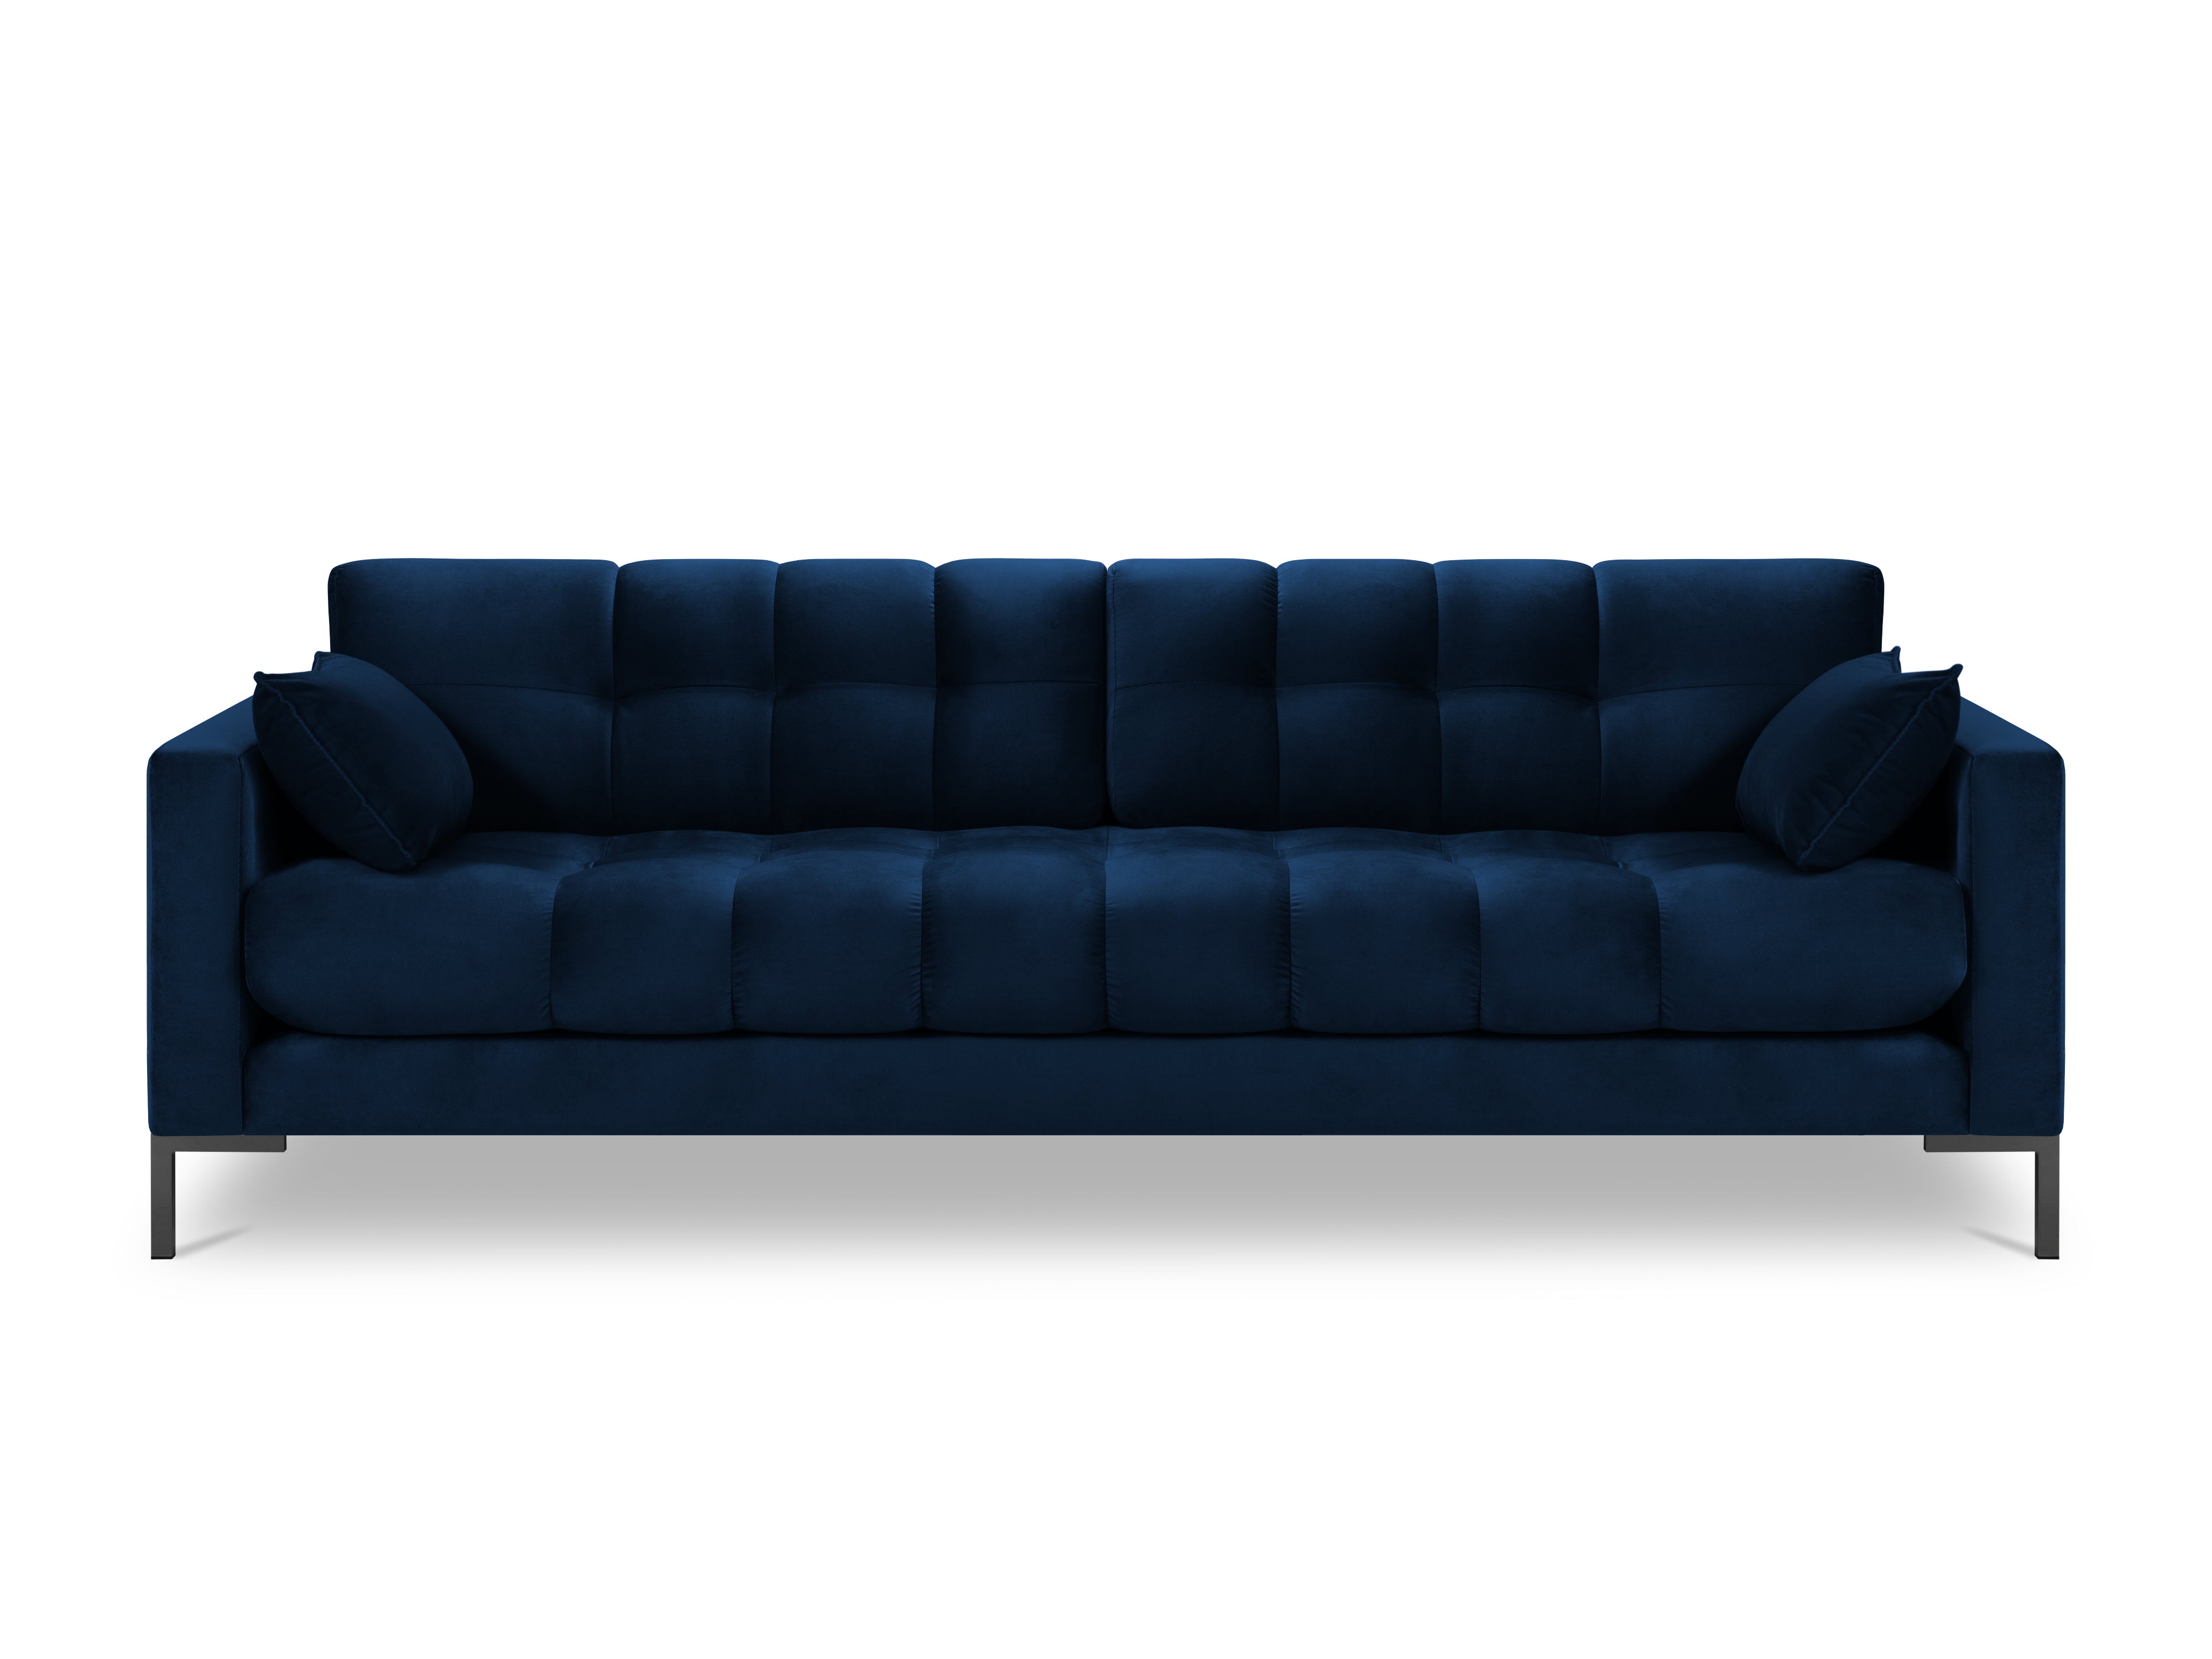 Blue sofa with a black base